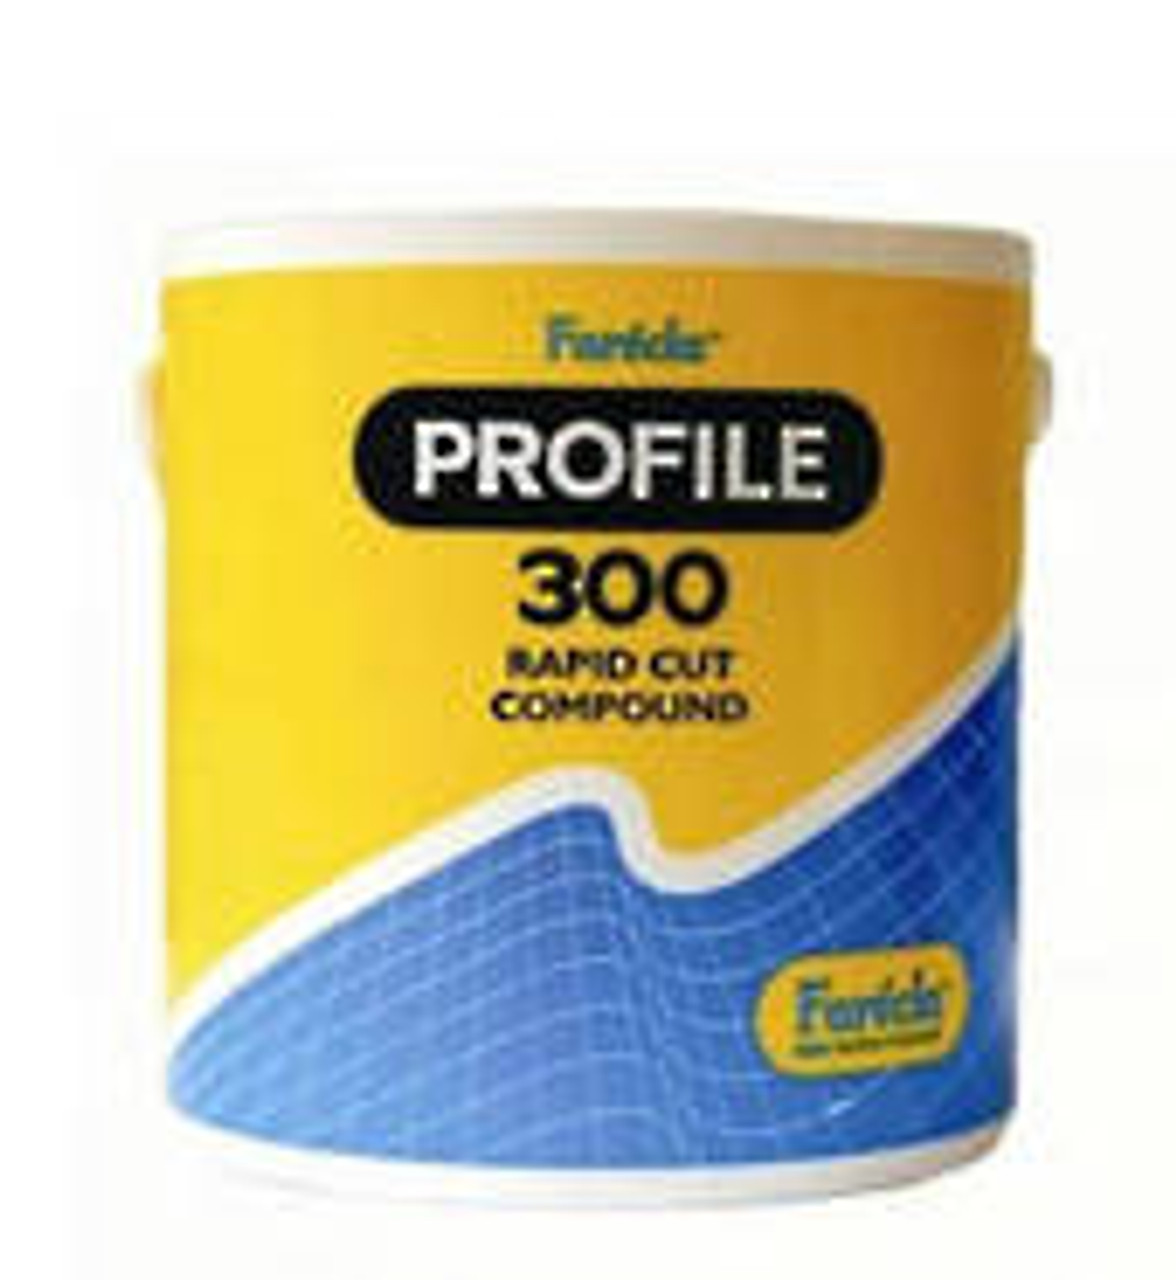 Farecla Profile 300 Rapid Cut Compound 3.2Kg